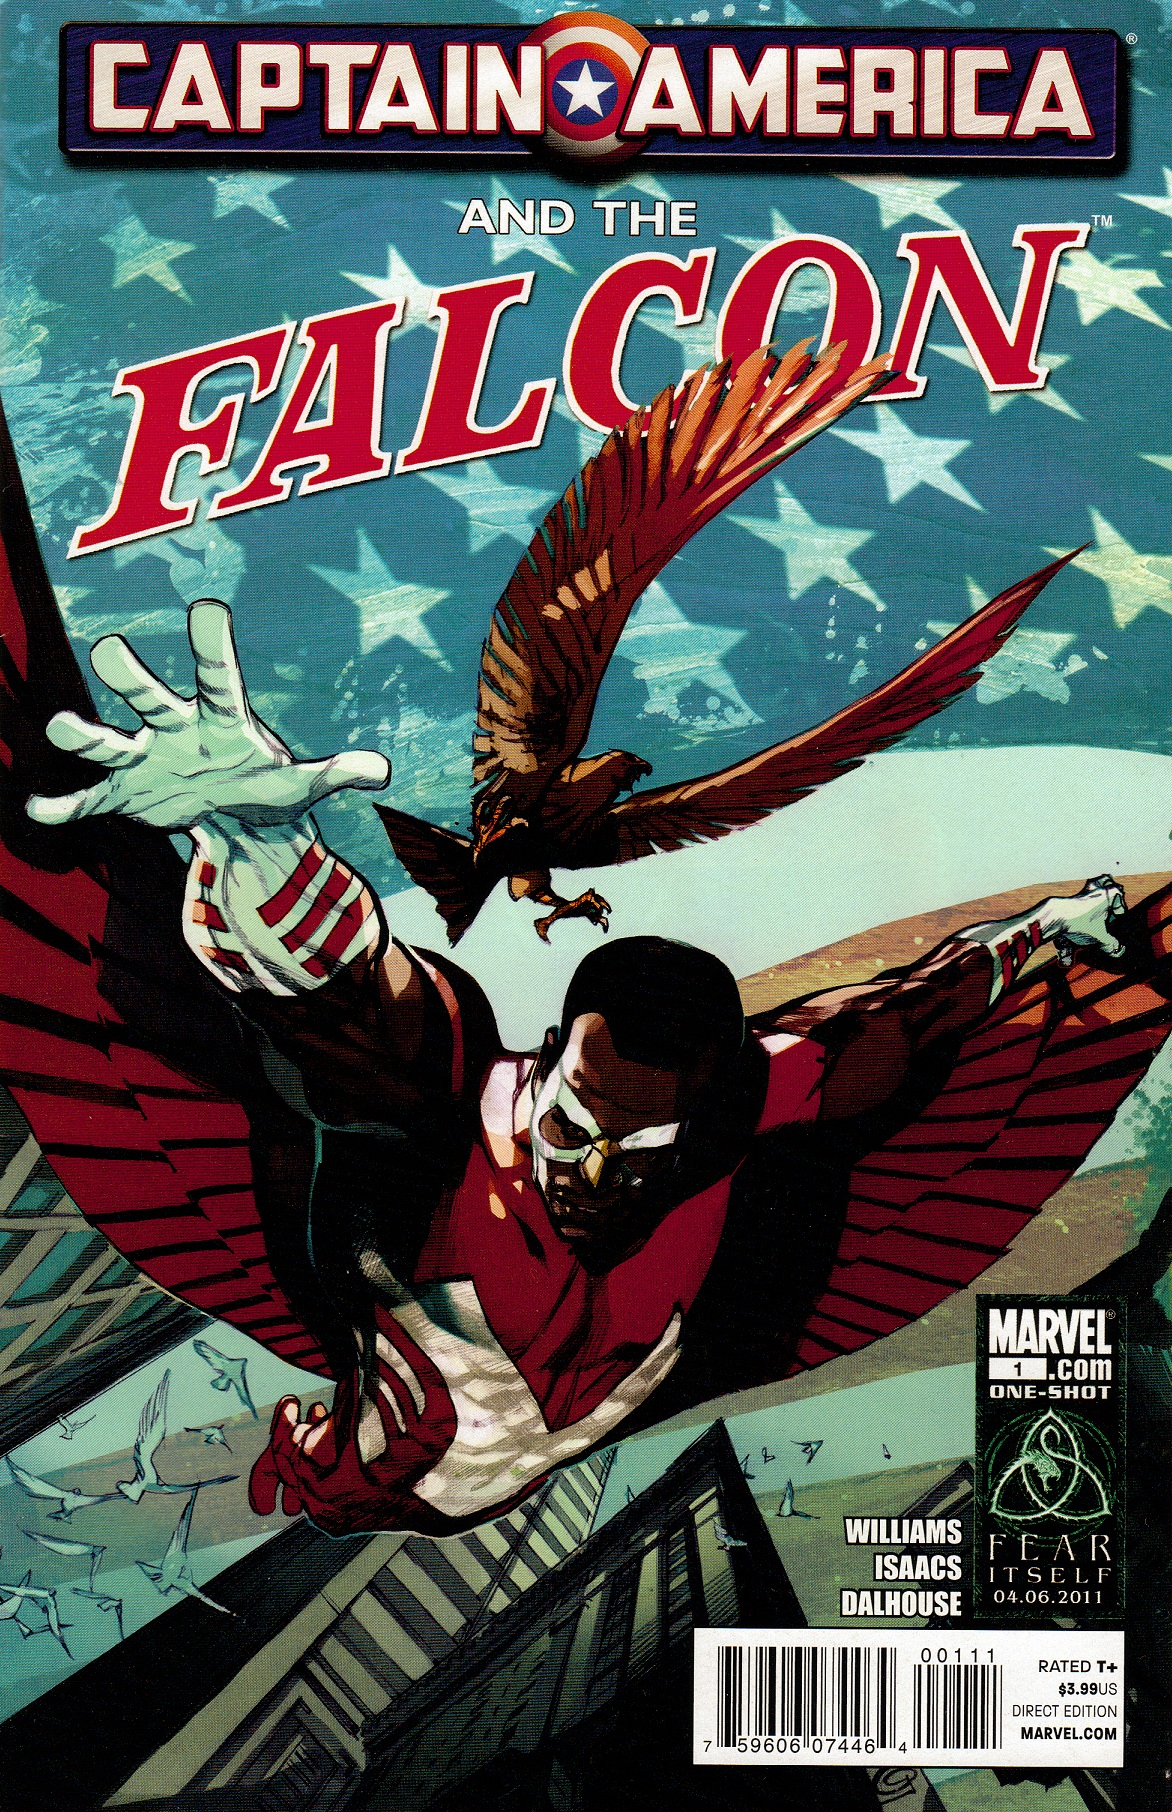 leaked falcon captain america